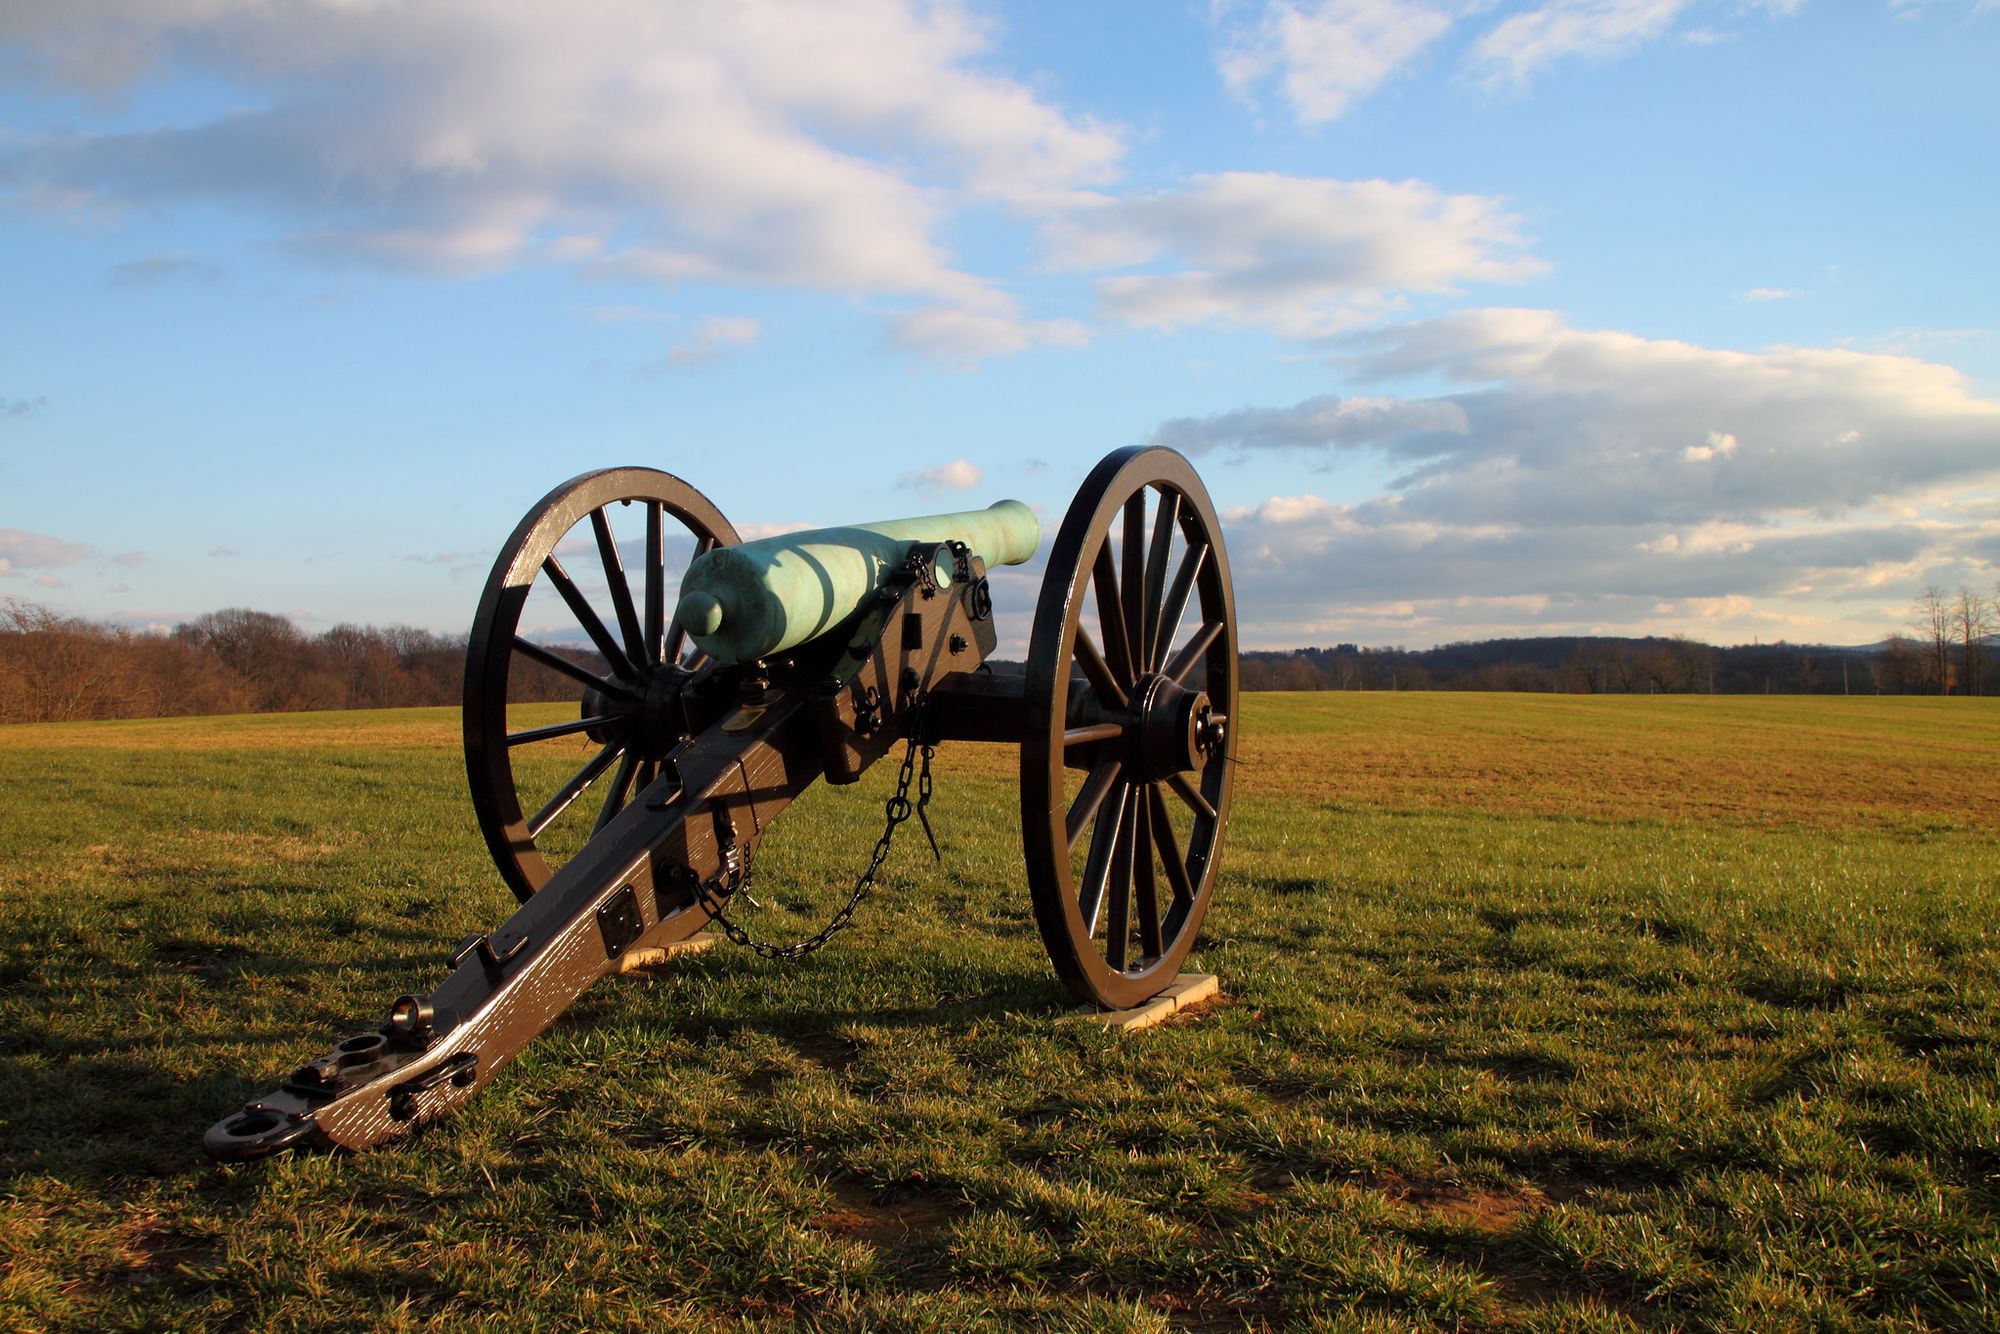 Civil War Discovery Trail